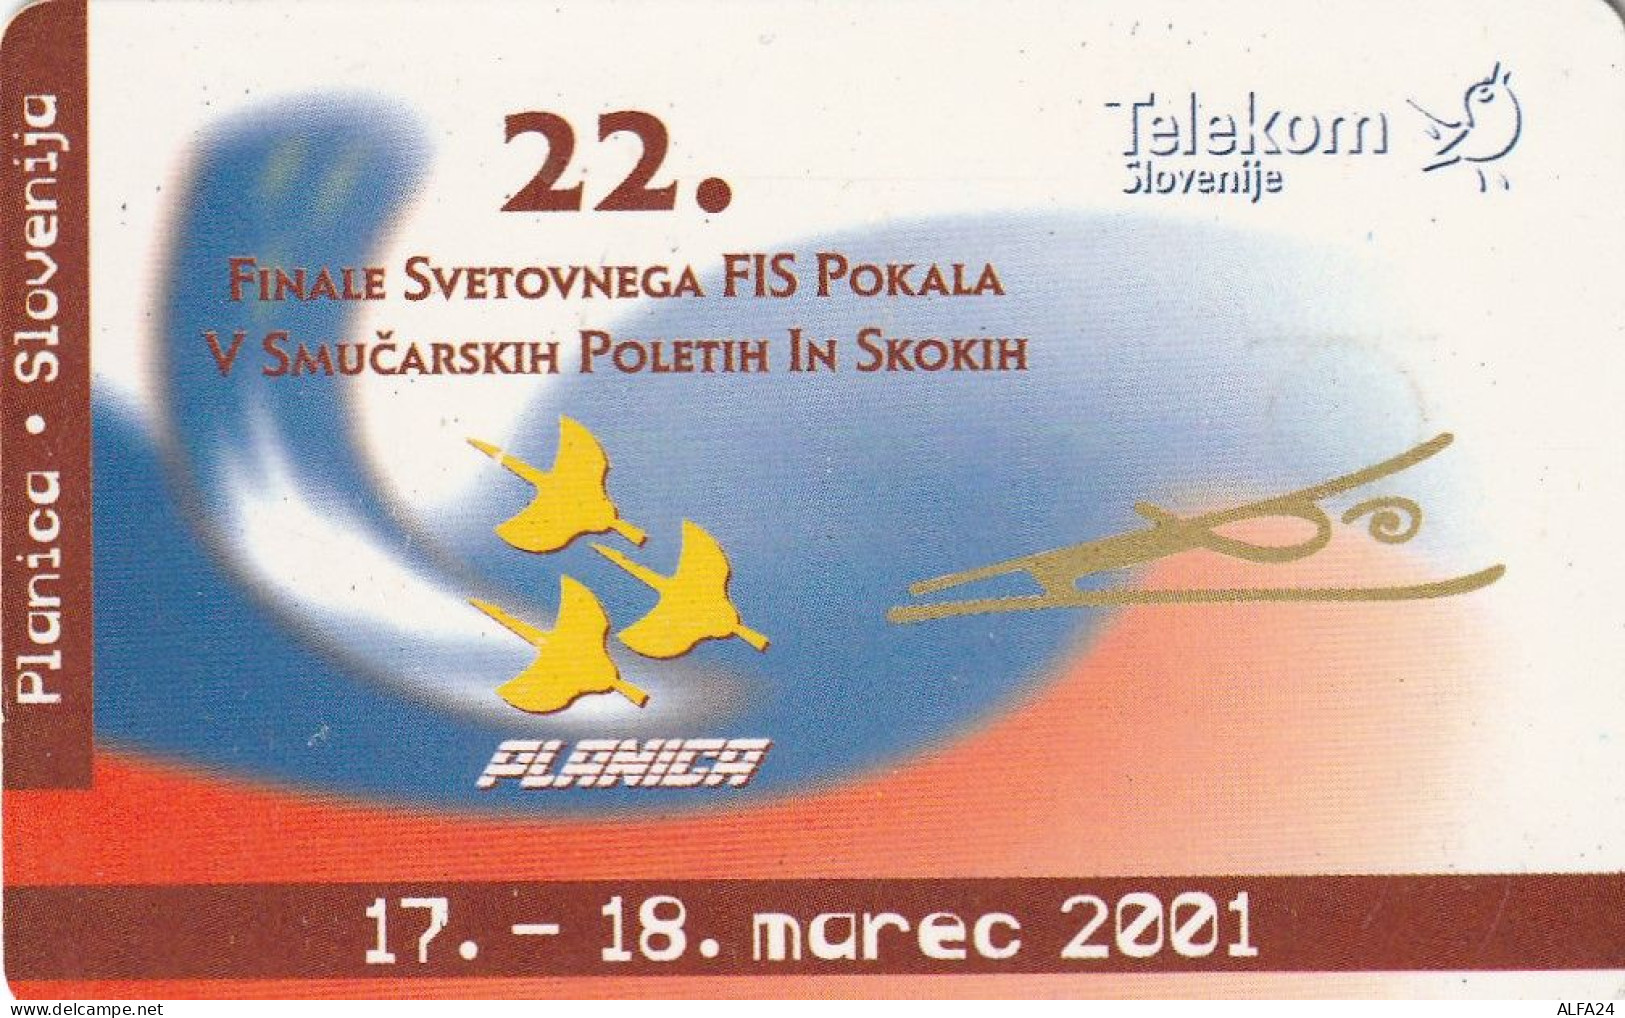 PHONE CARD SLOVENIA (E24.2.5 - Slovenië